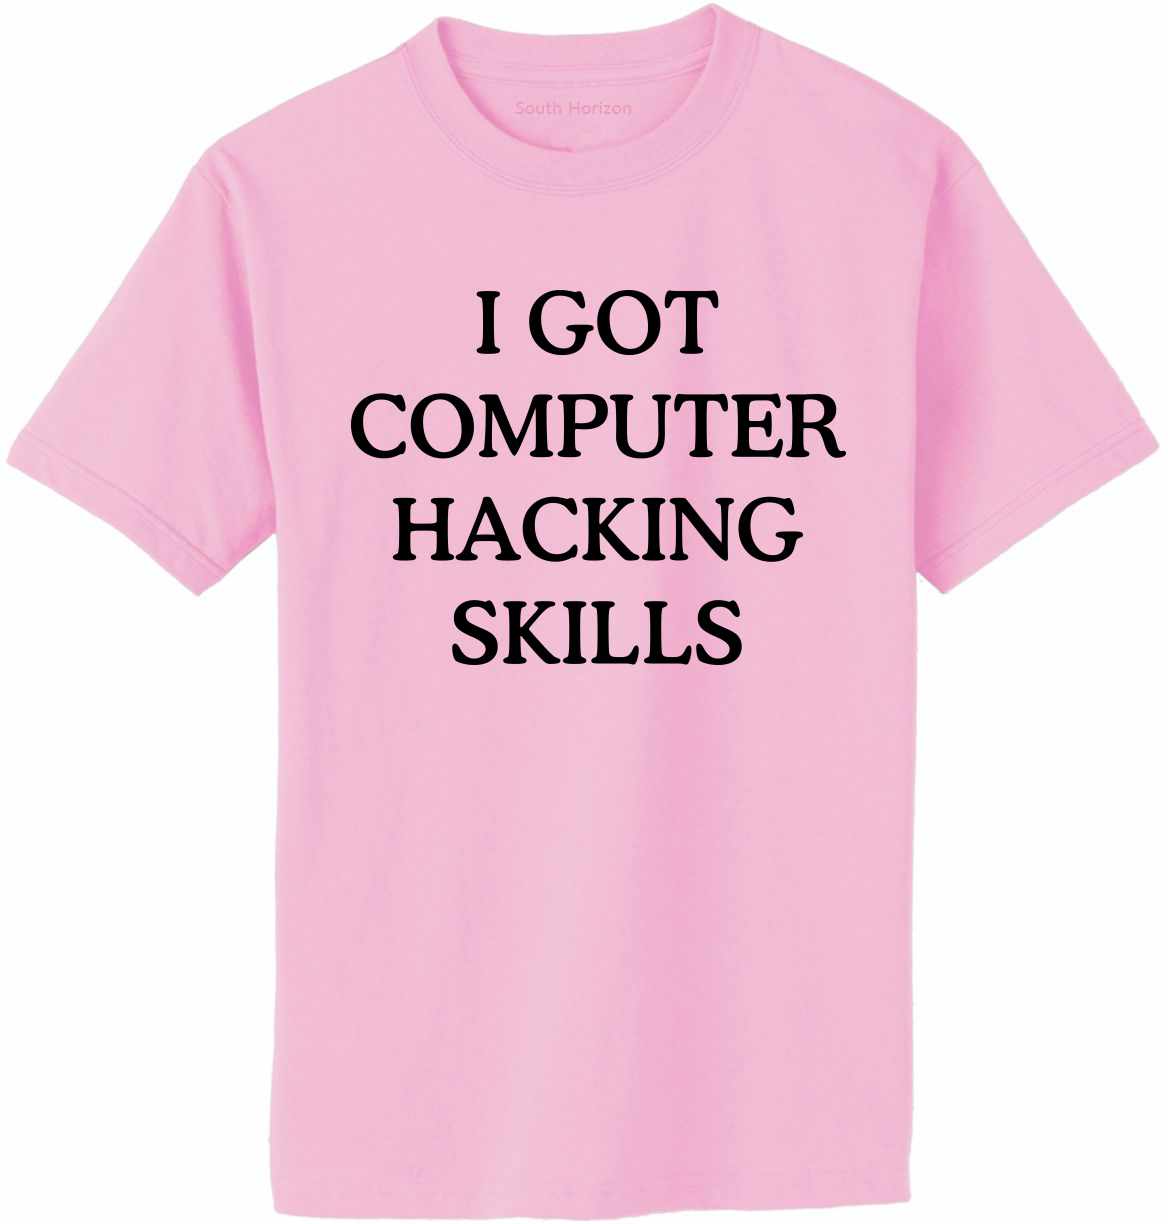 I GOT COMPUTER HACKING SKILLS Adult T-Shirt